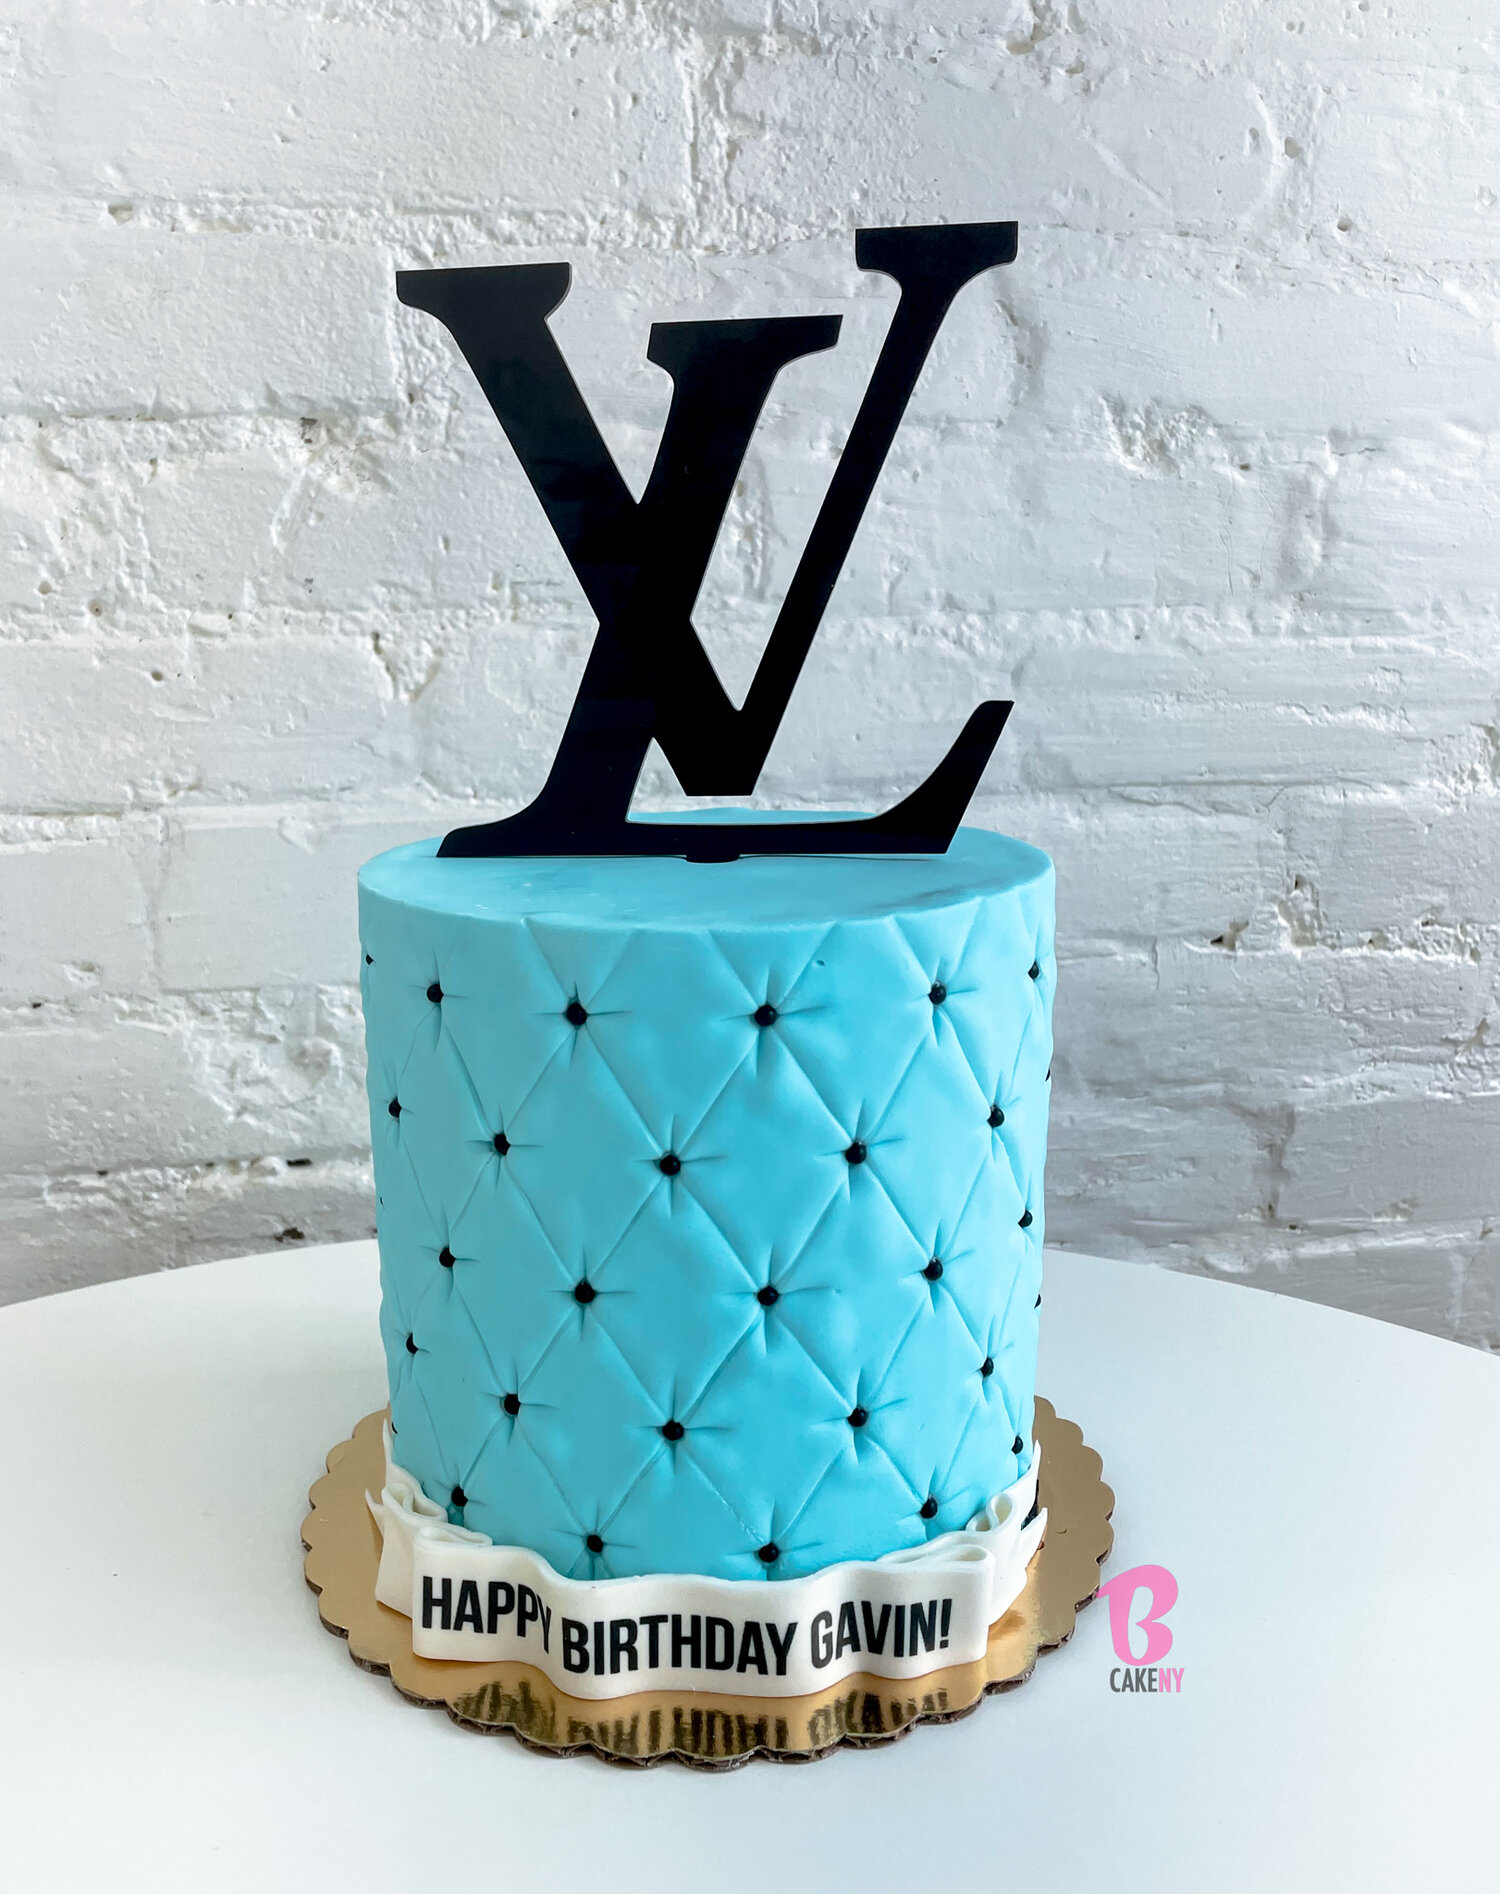 LV Cake  Fondant cake designs, Louis vuitton cake, Birthday cakes for women